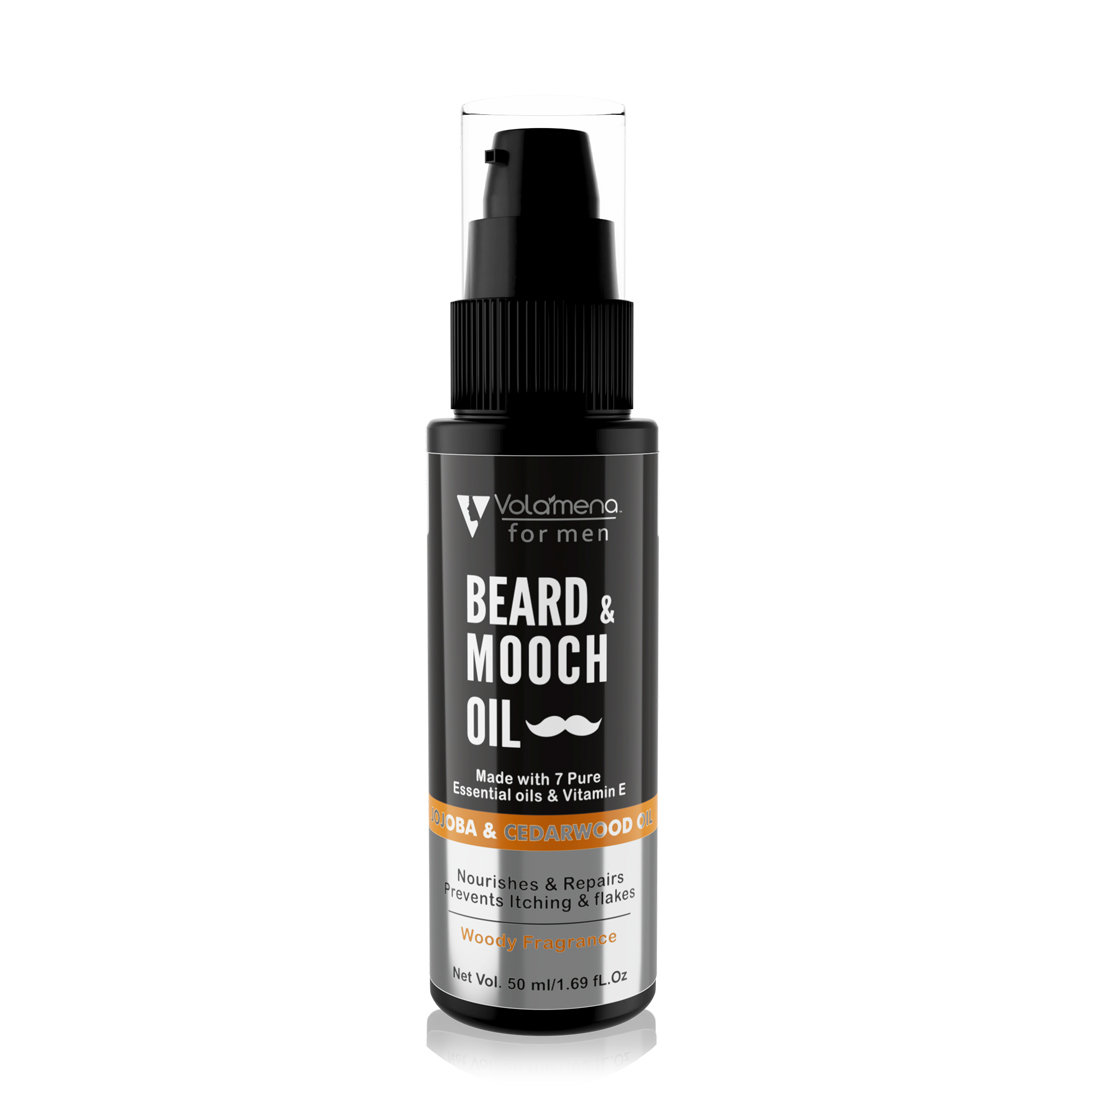 Beard & Mooch oil Jojoba and Cedarwood Oil 50 ml